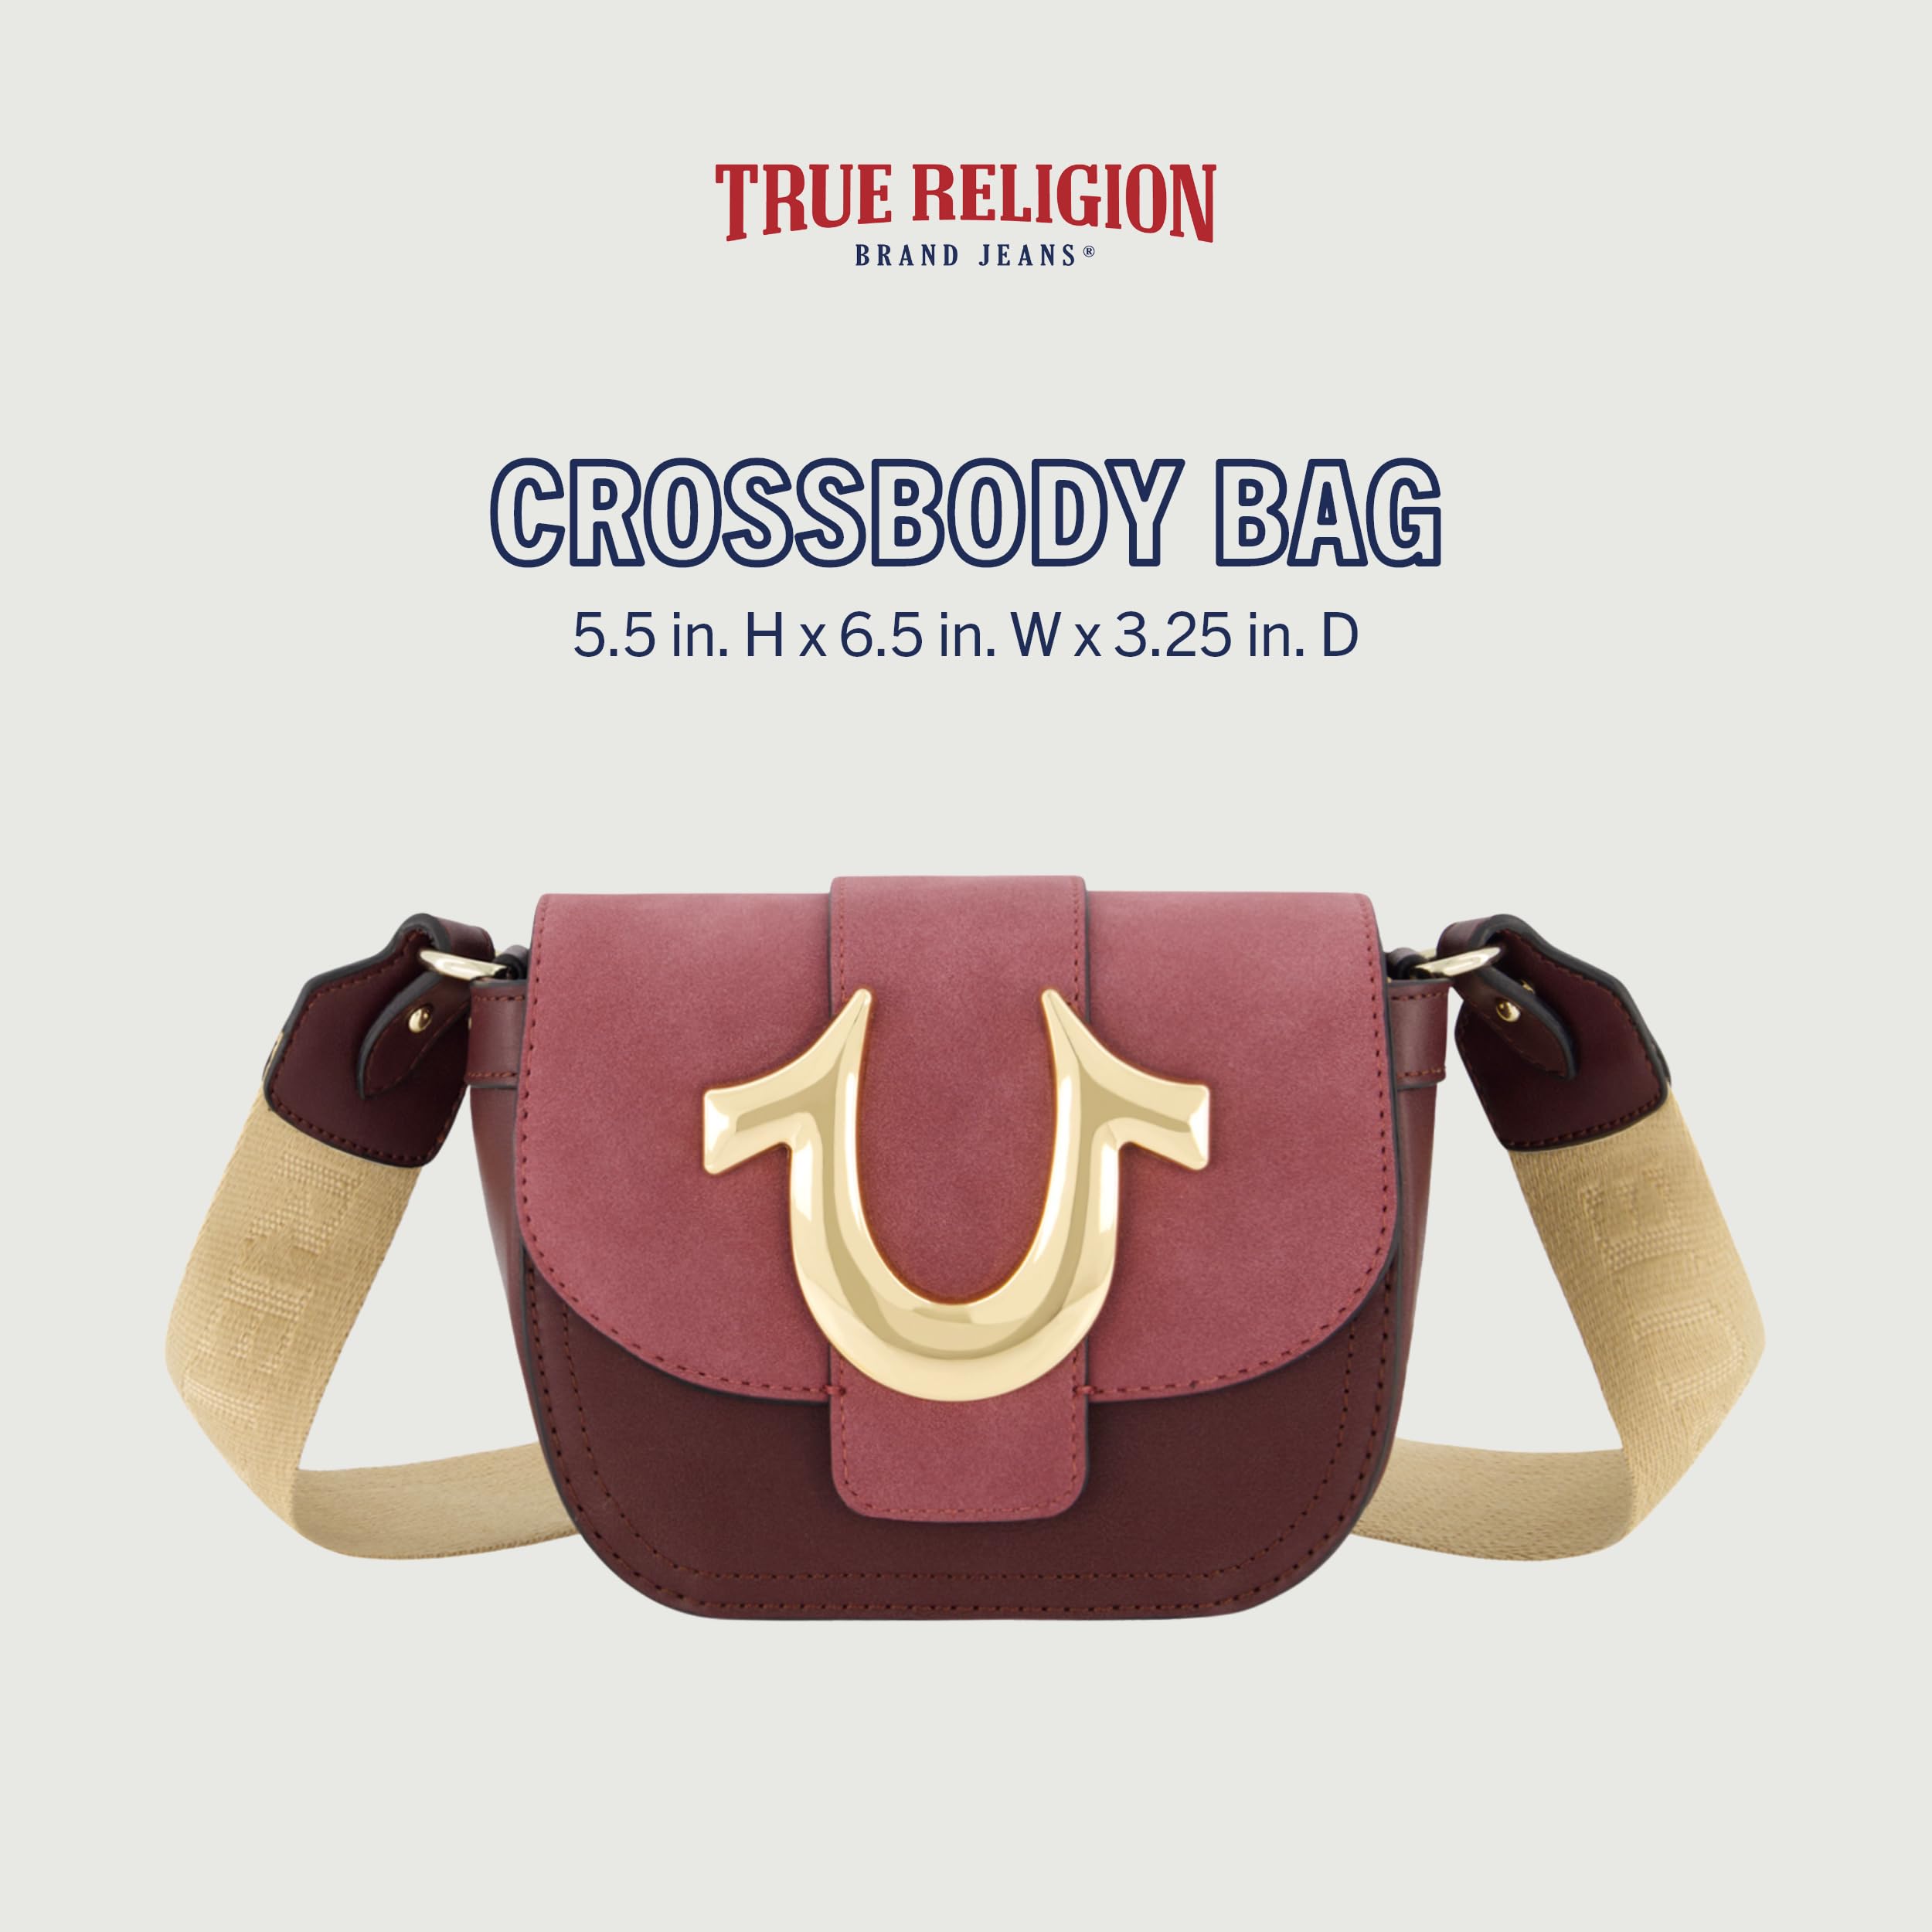 True Religion Women's Crossbody Bag, Suede Mini Flap Adjustable Shoulder Handbag with Horseshoe Logo, Wine